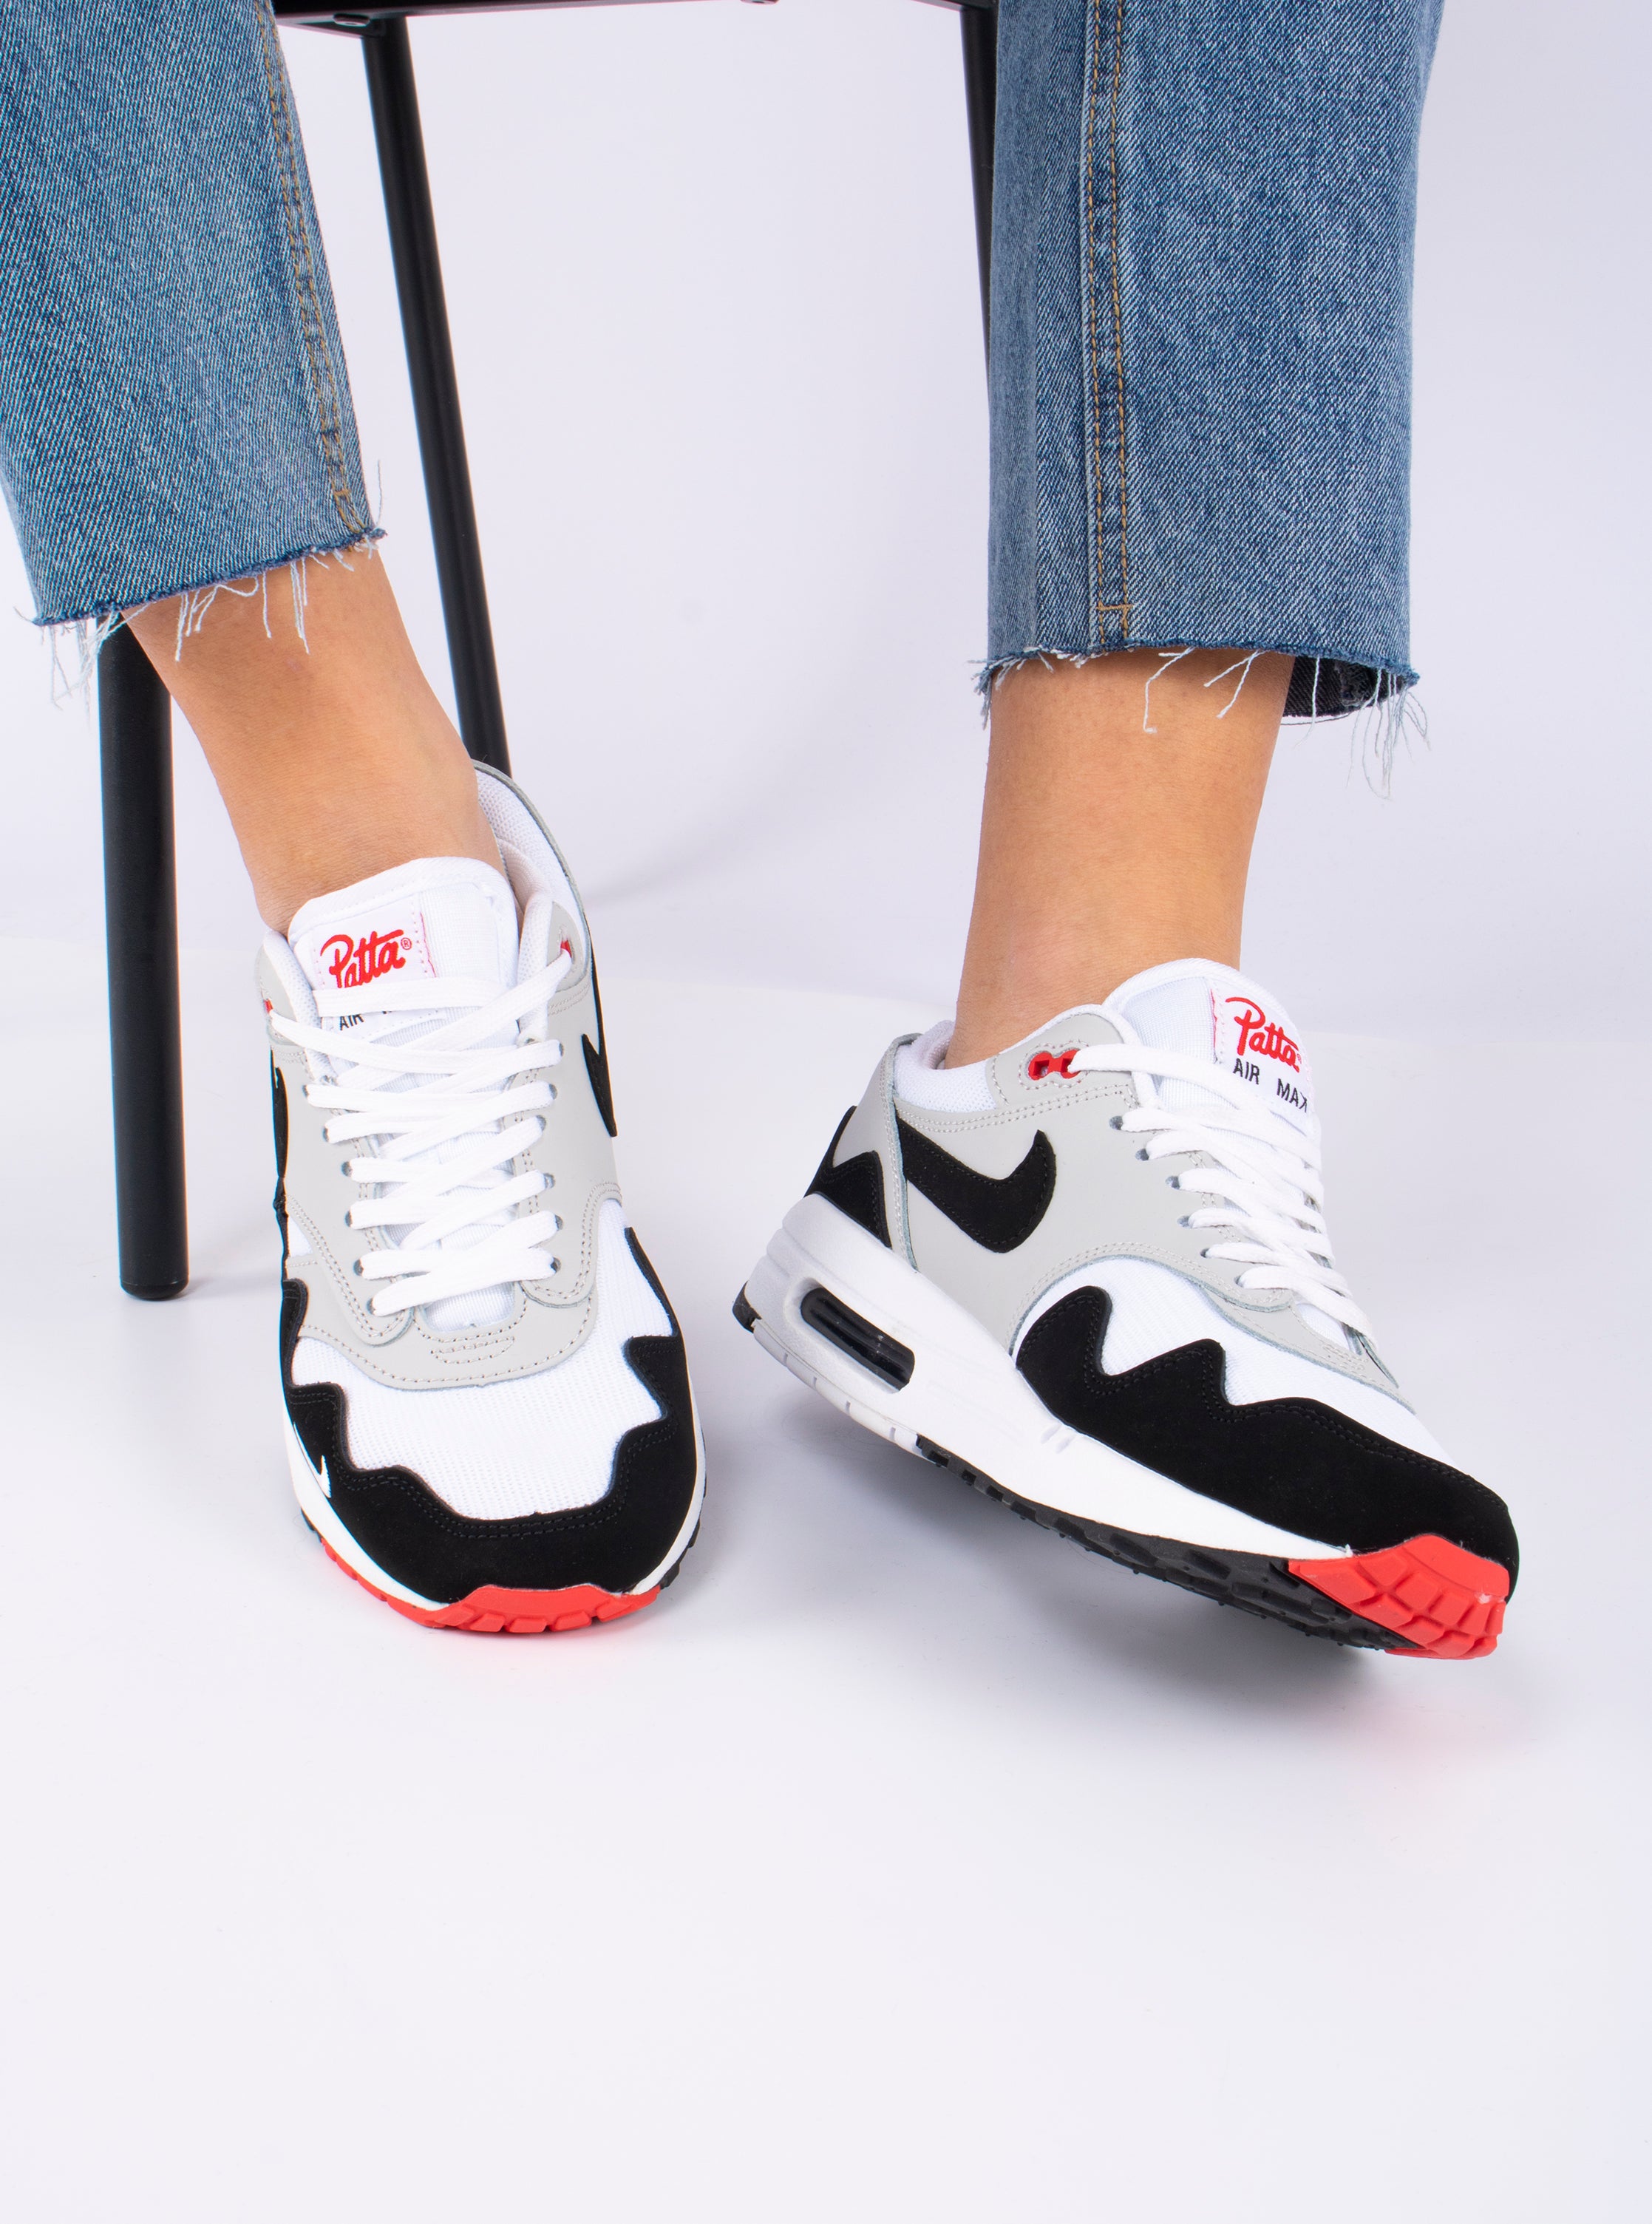 Nike Air Max 1 x Patta White / Red / Black